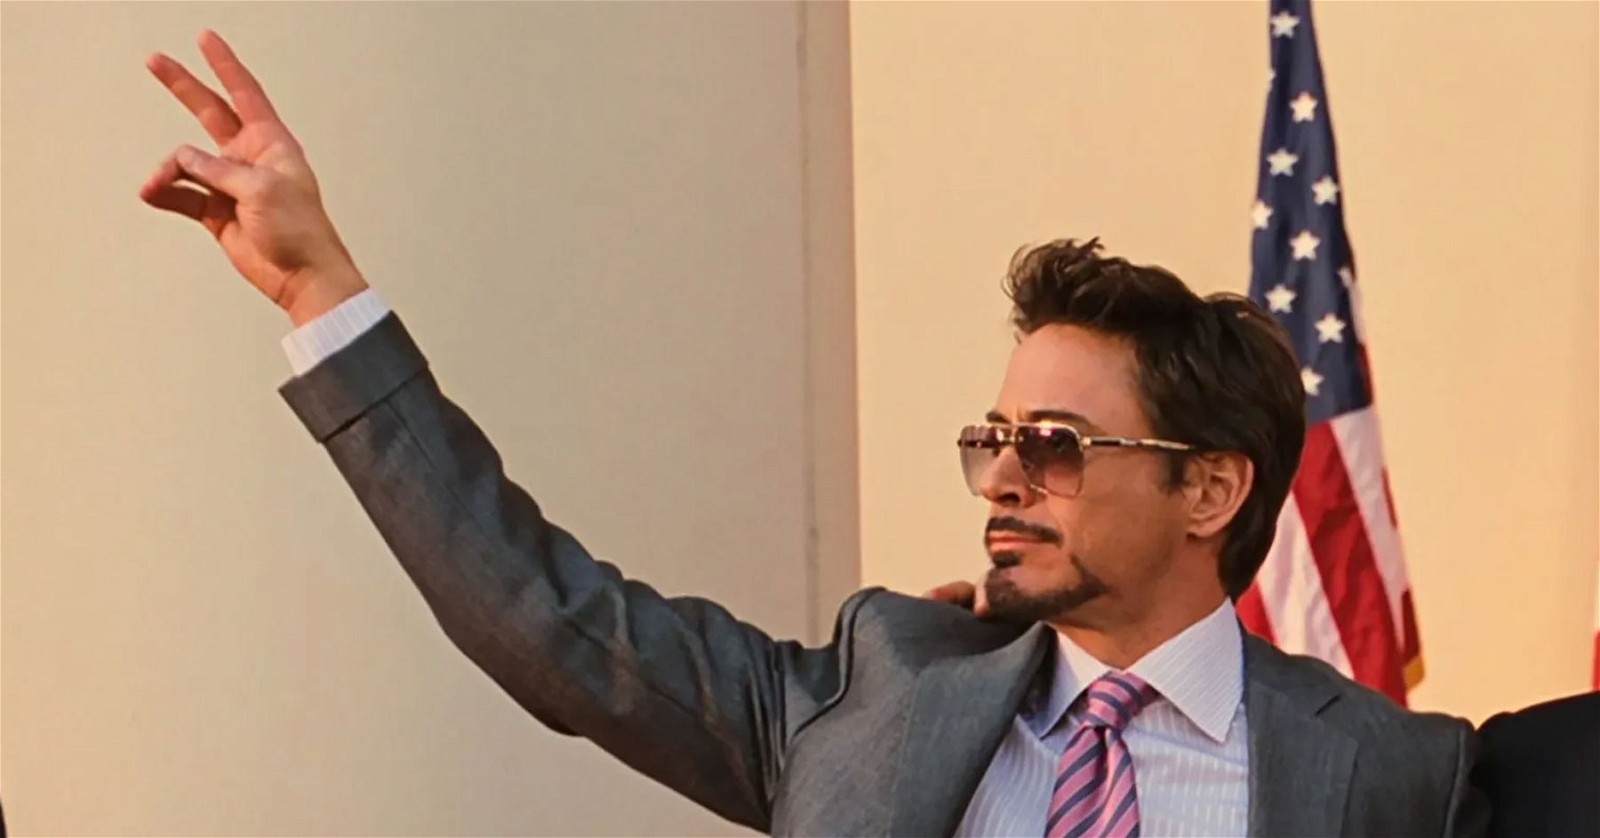 Tony Stark's flaunting the peace sign in Iron Man 2